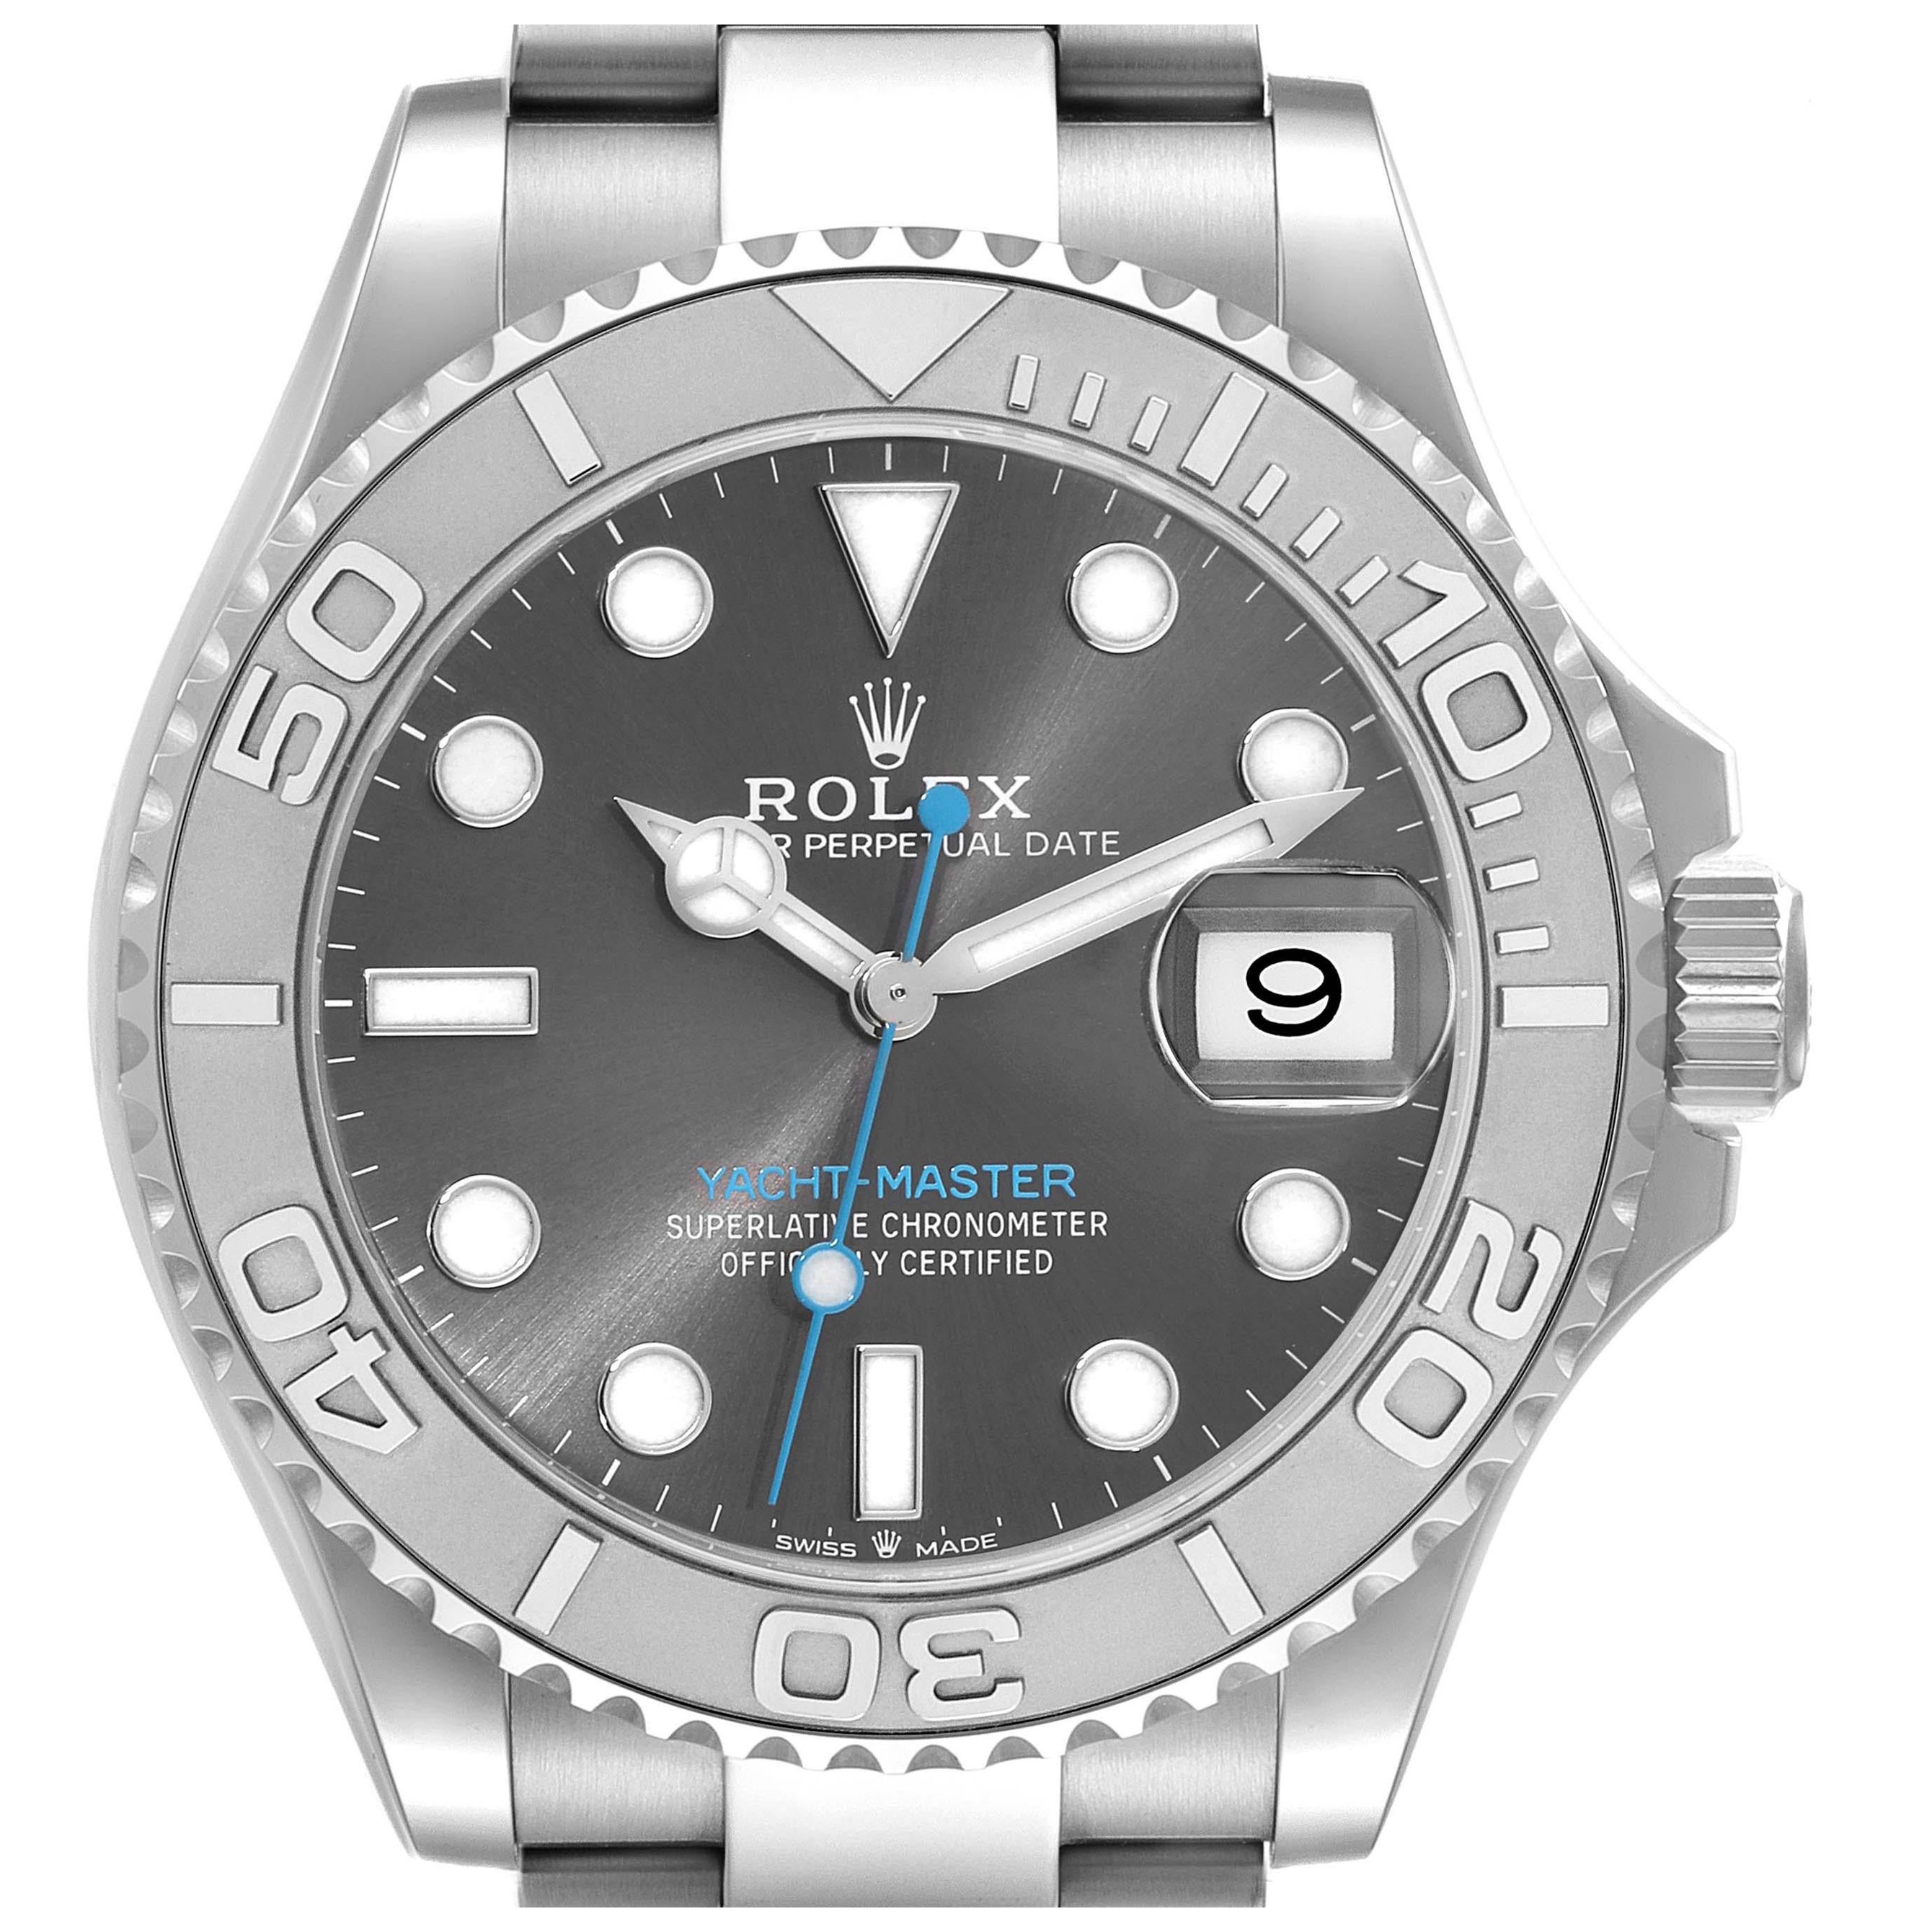 Rolex Yachtmaster Steel Platinum Bezel Rhodium Dial Mens Watch 126622 Box Card